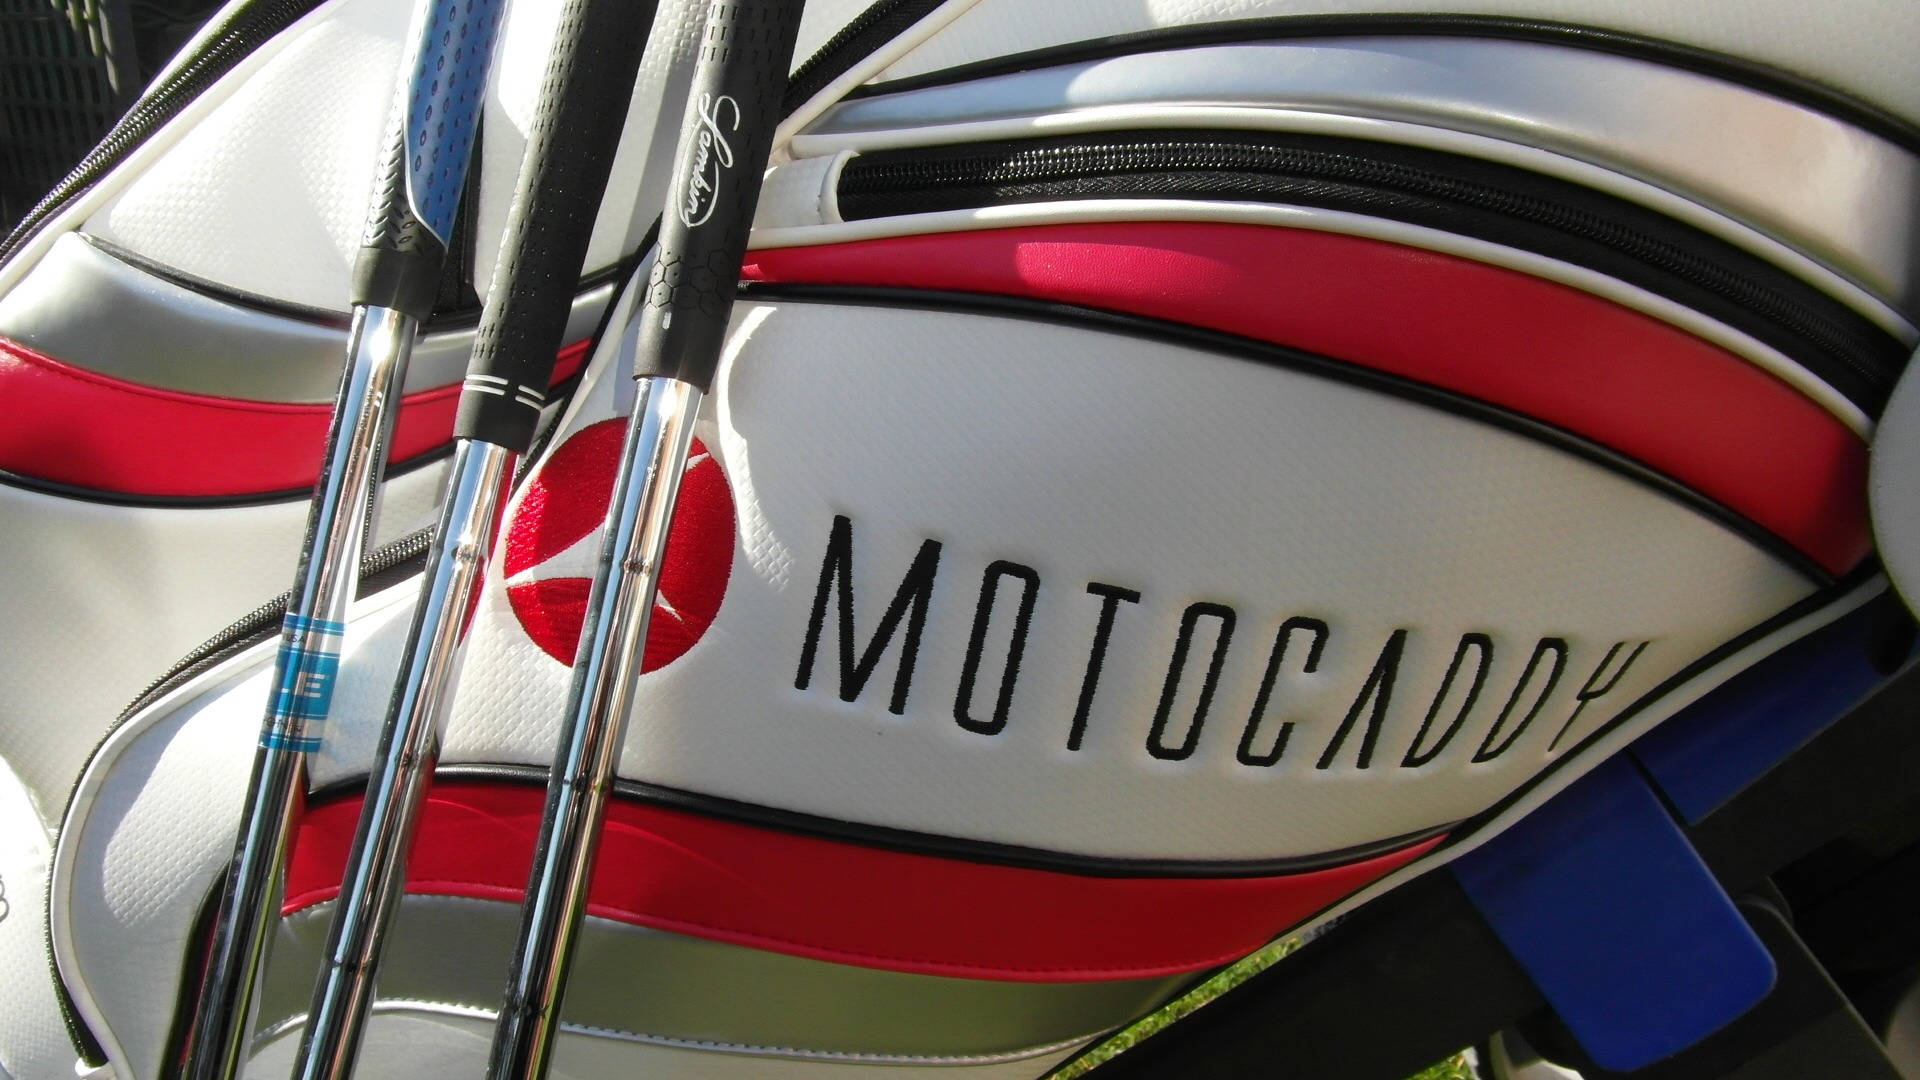 Caption: Stunning Motocaddy Golf Set in Action Wallpaper